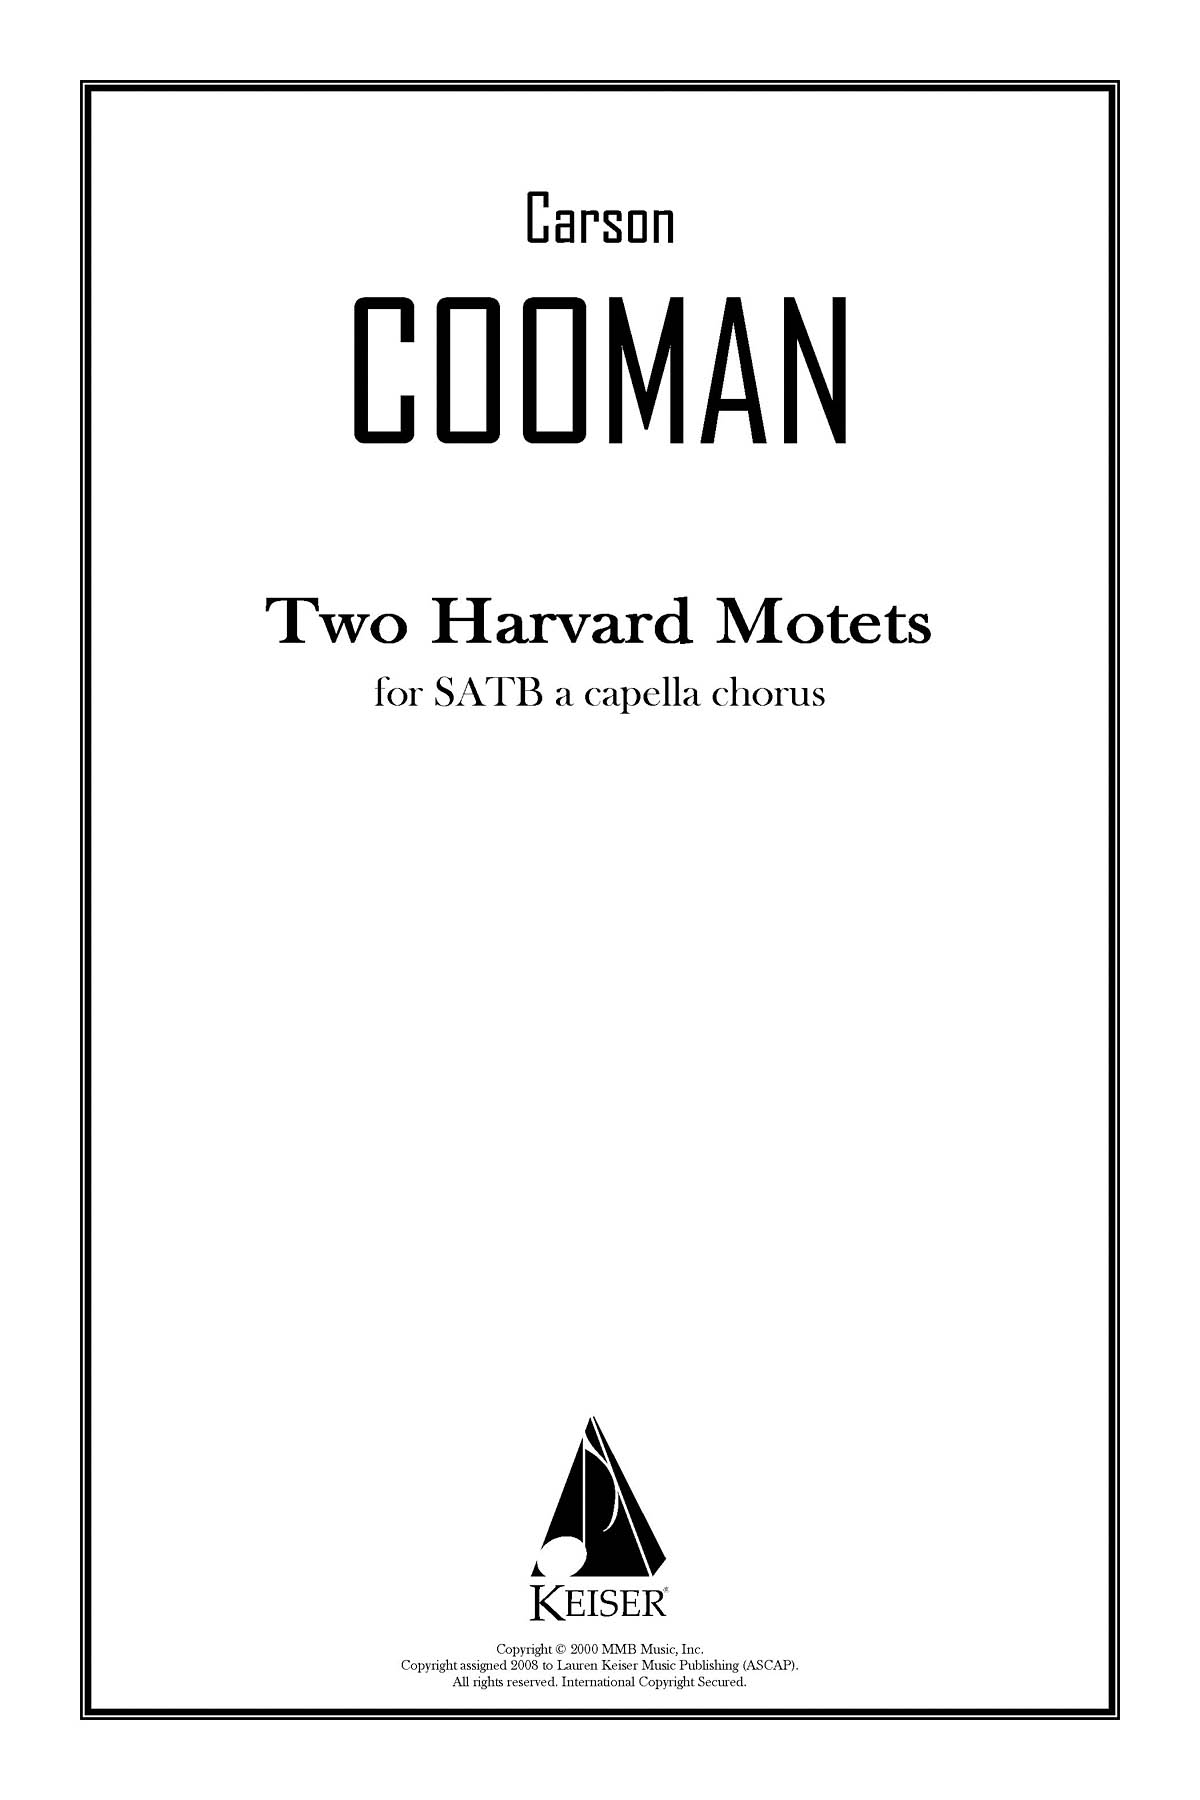 Two Harvard Motets